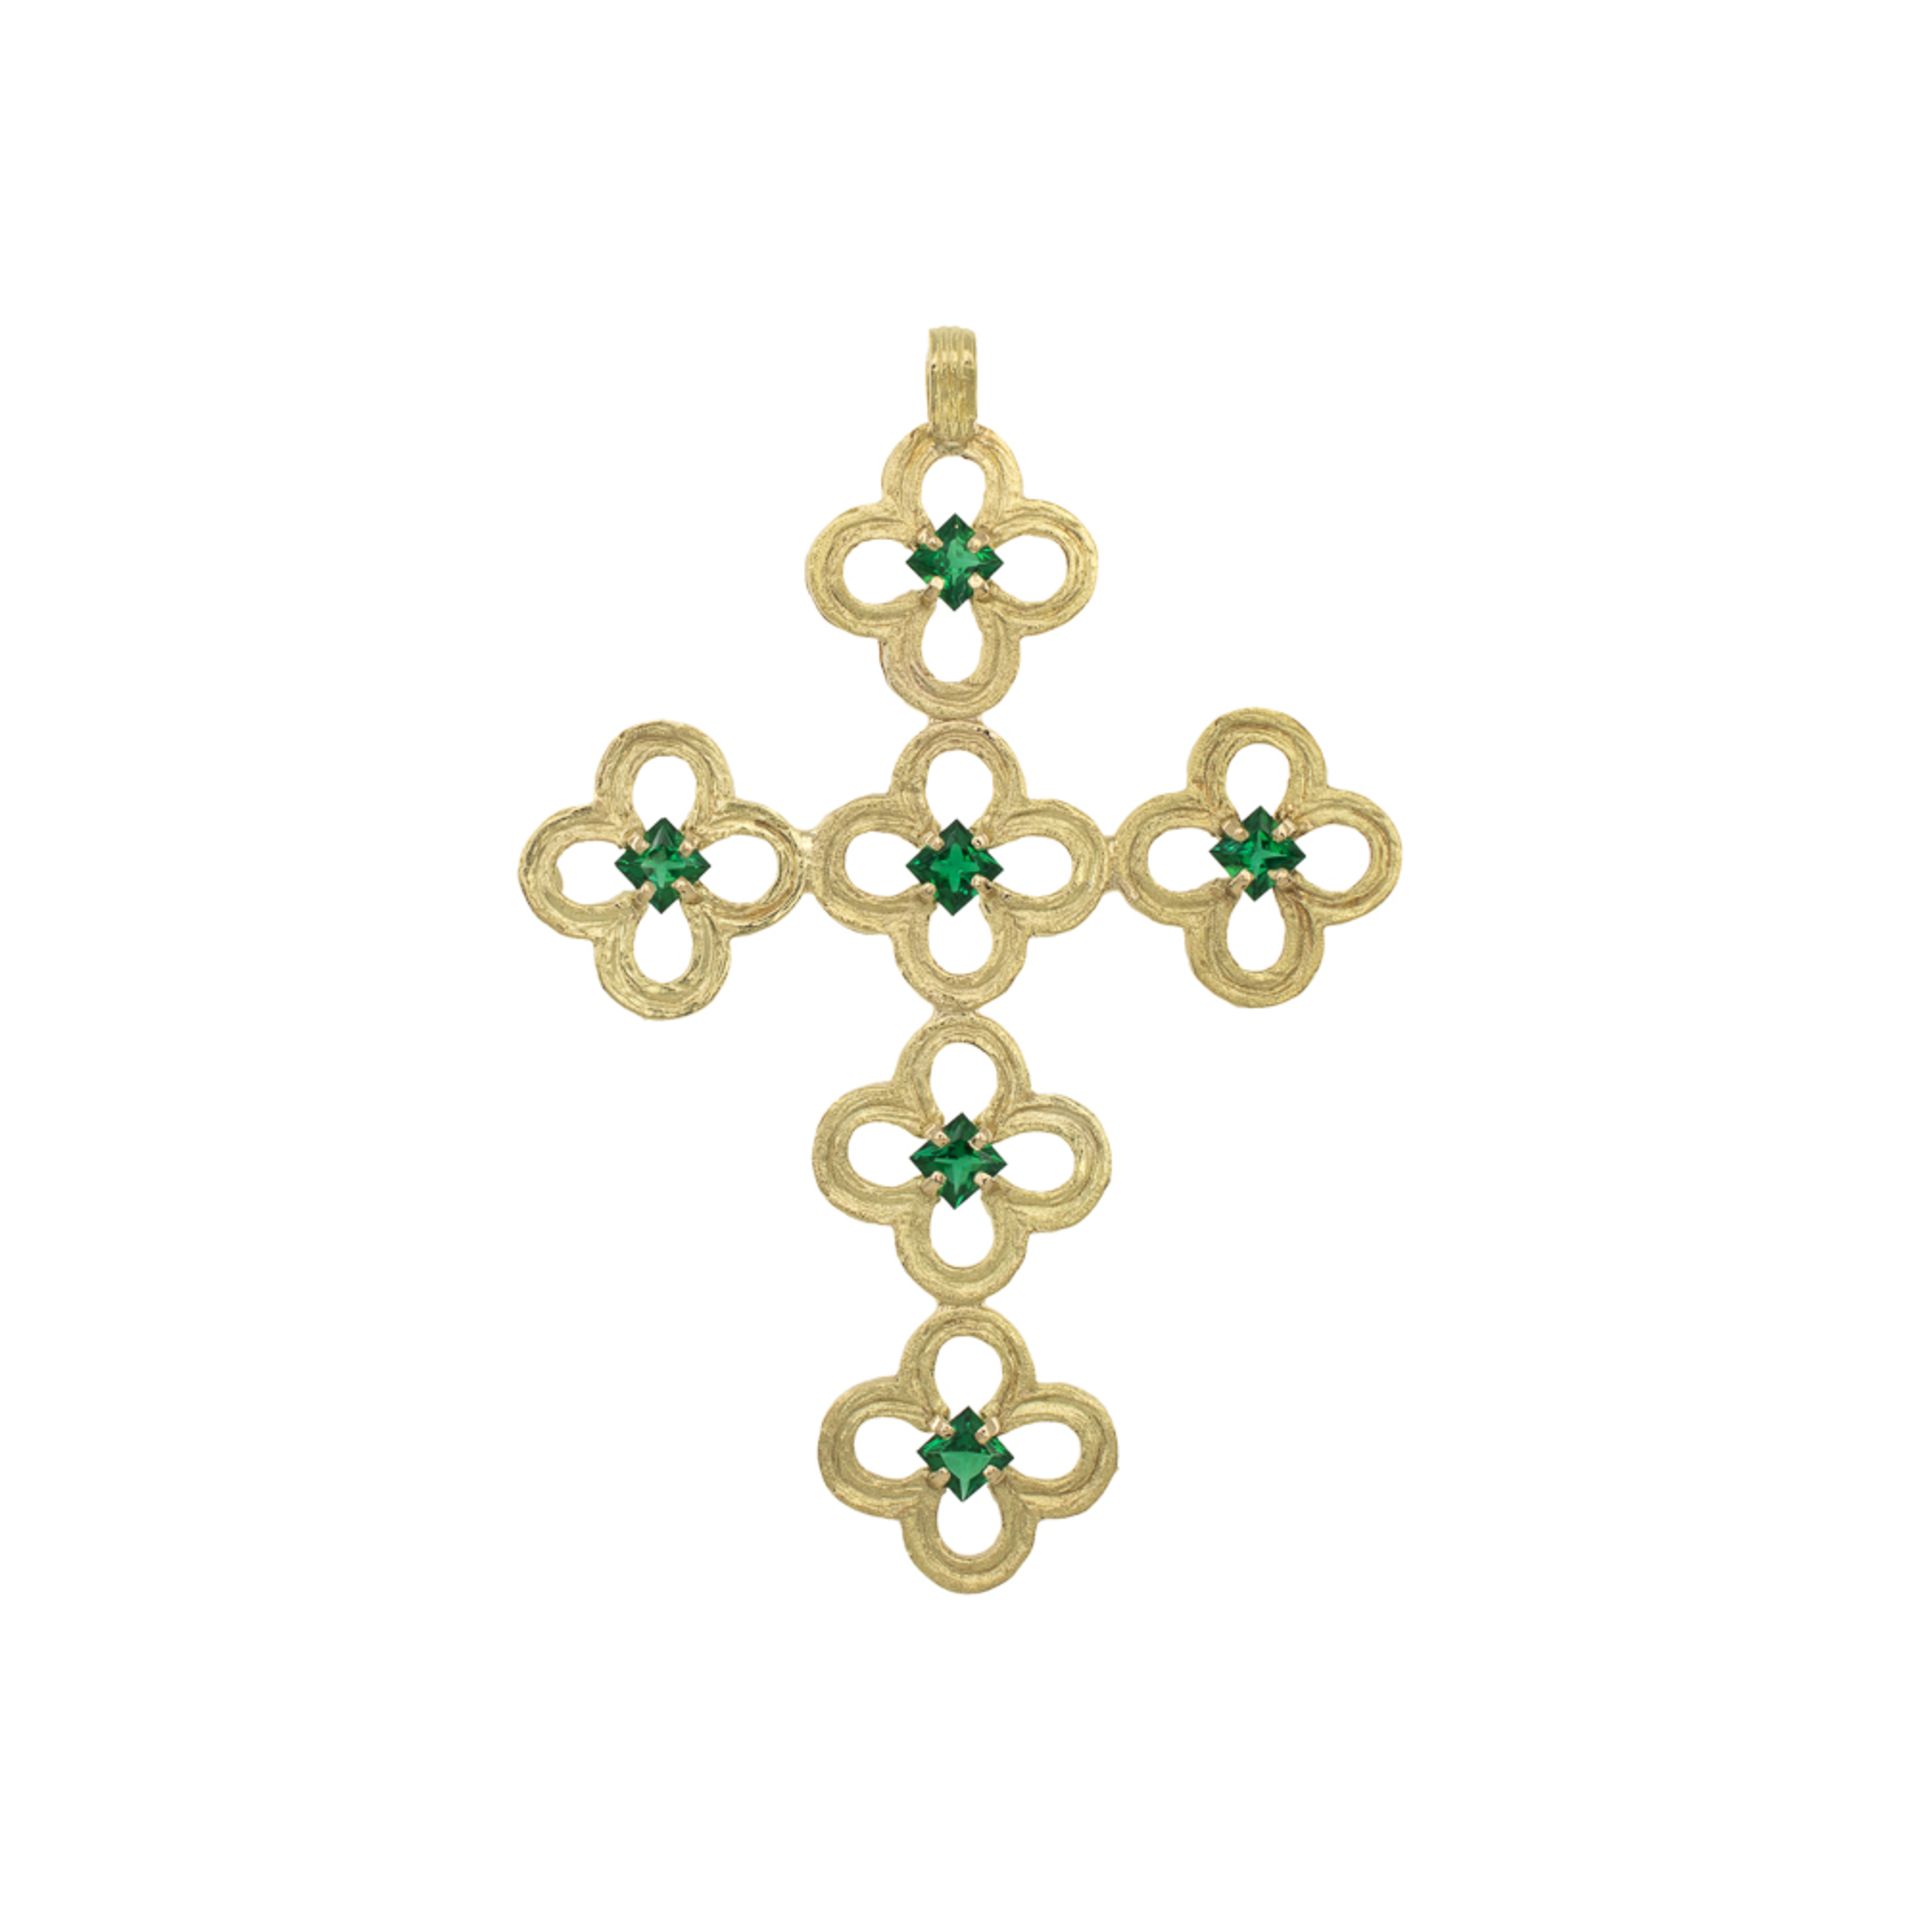 18kt yellow gold and green garnets cross pendant